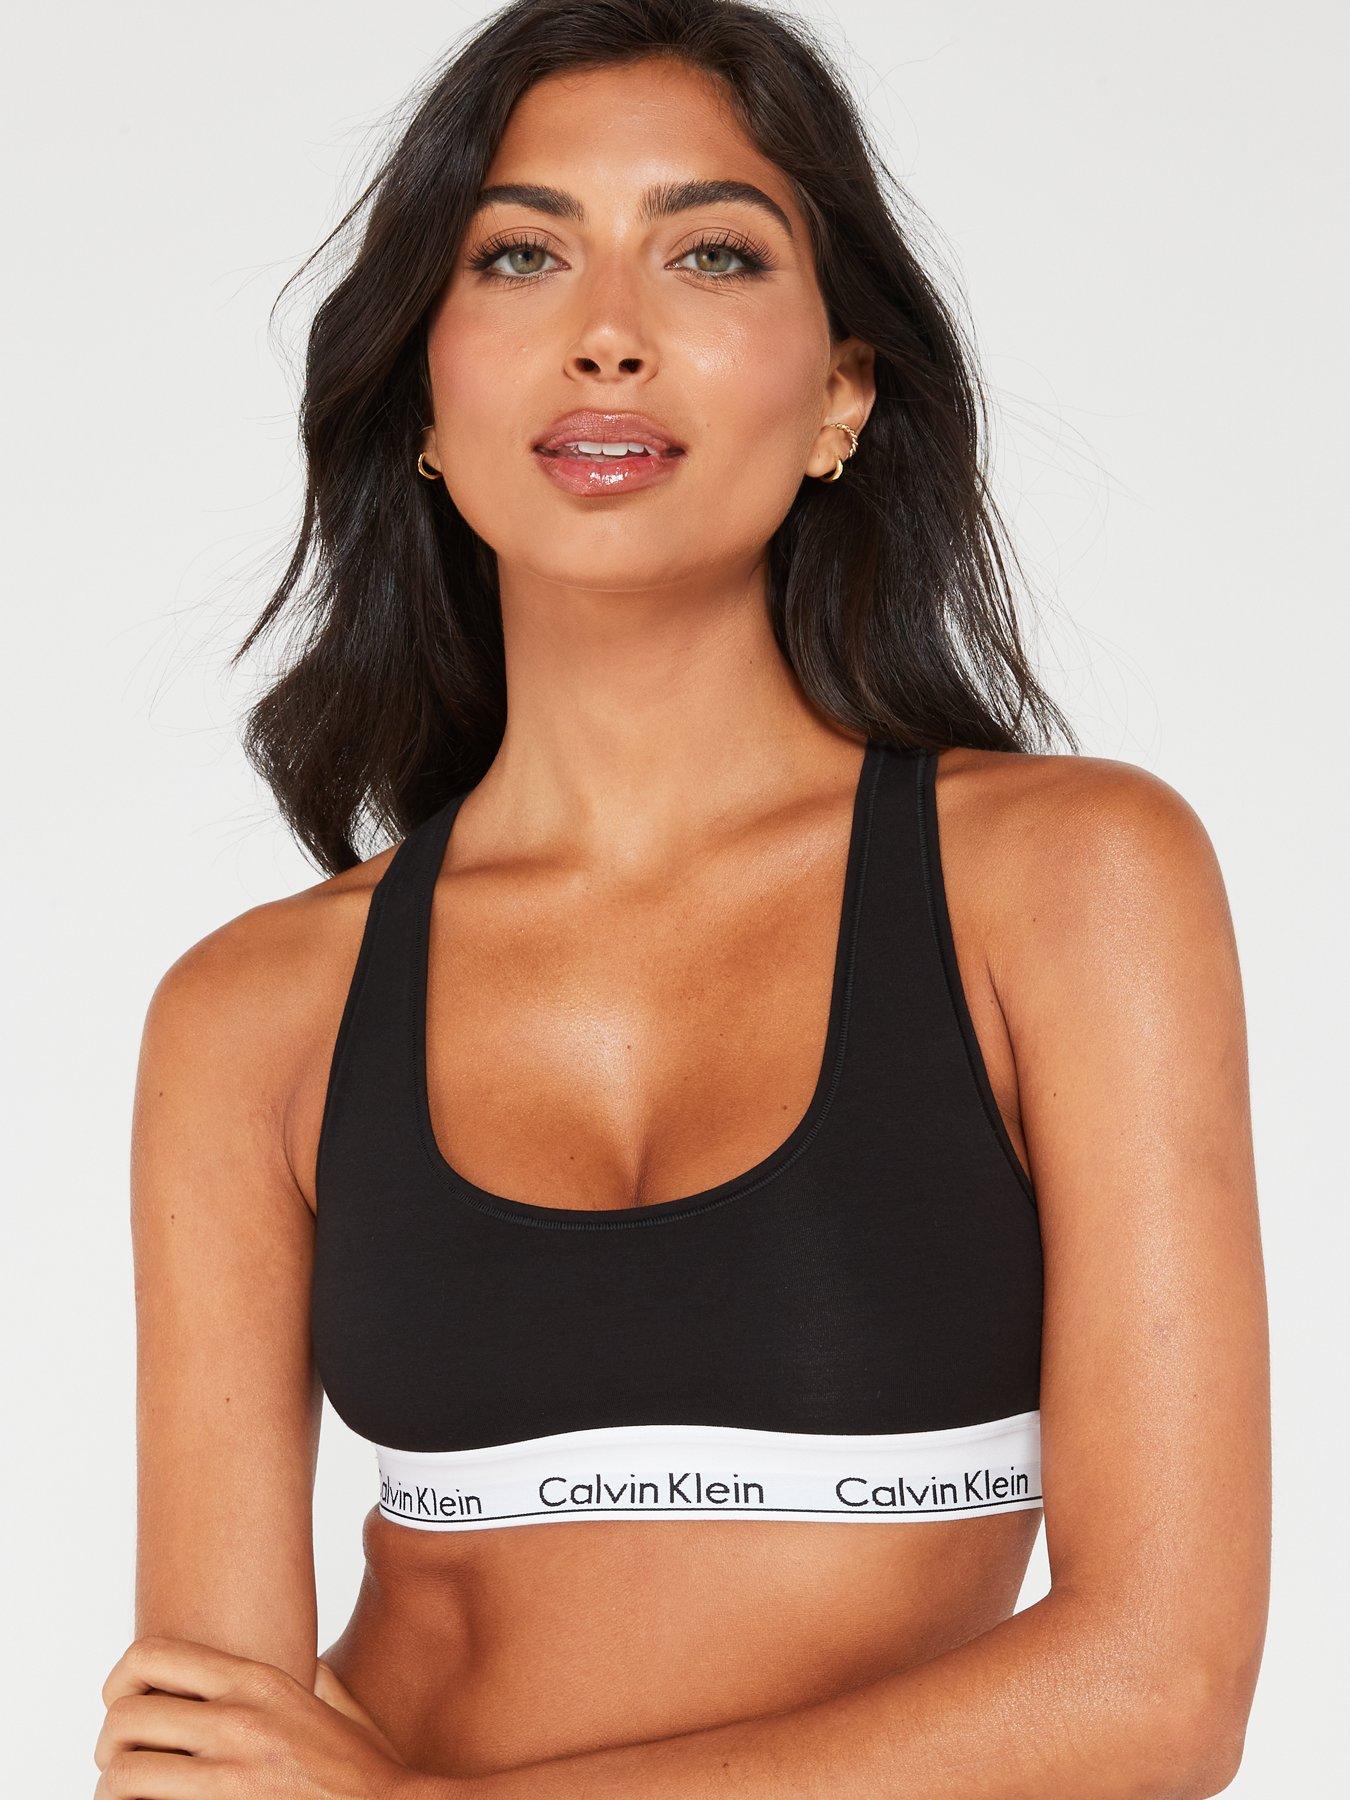 Calvin Klein Women's Modern Cotton Bralette and Bikini Set, White, X-Small  : Clothing, Shoes & Jewelry 